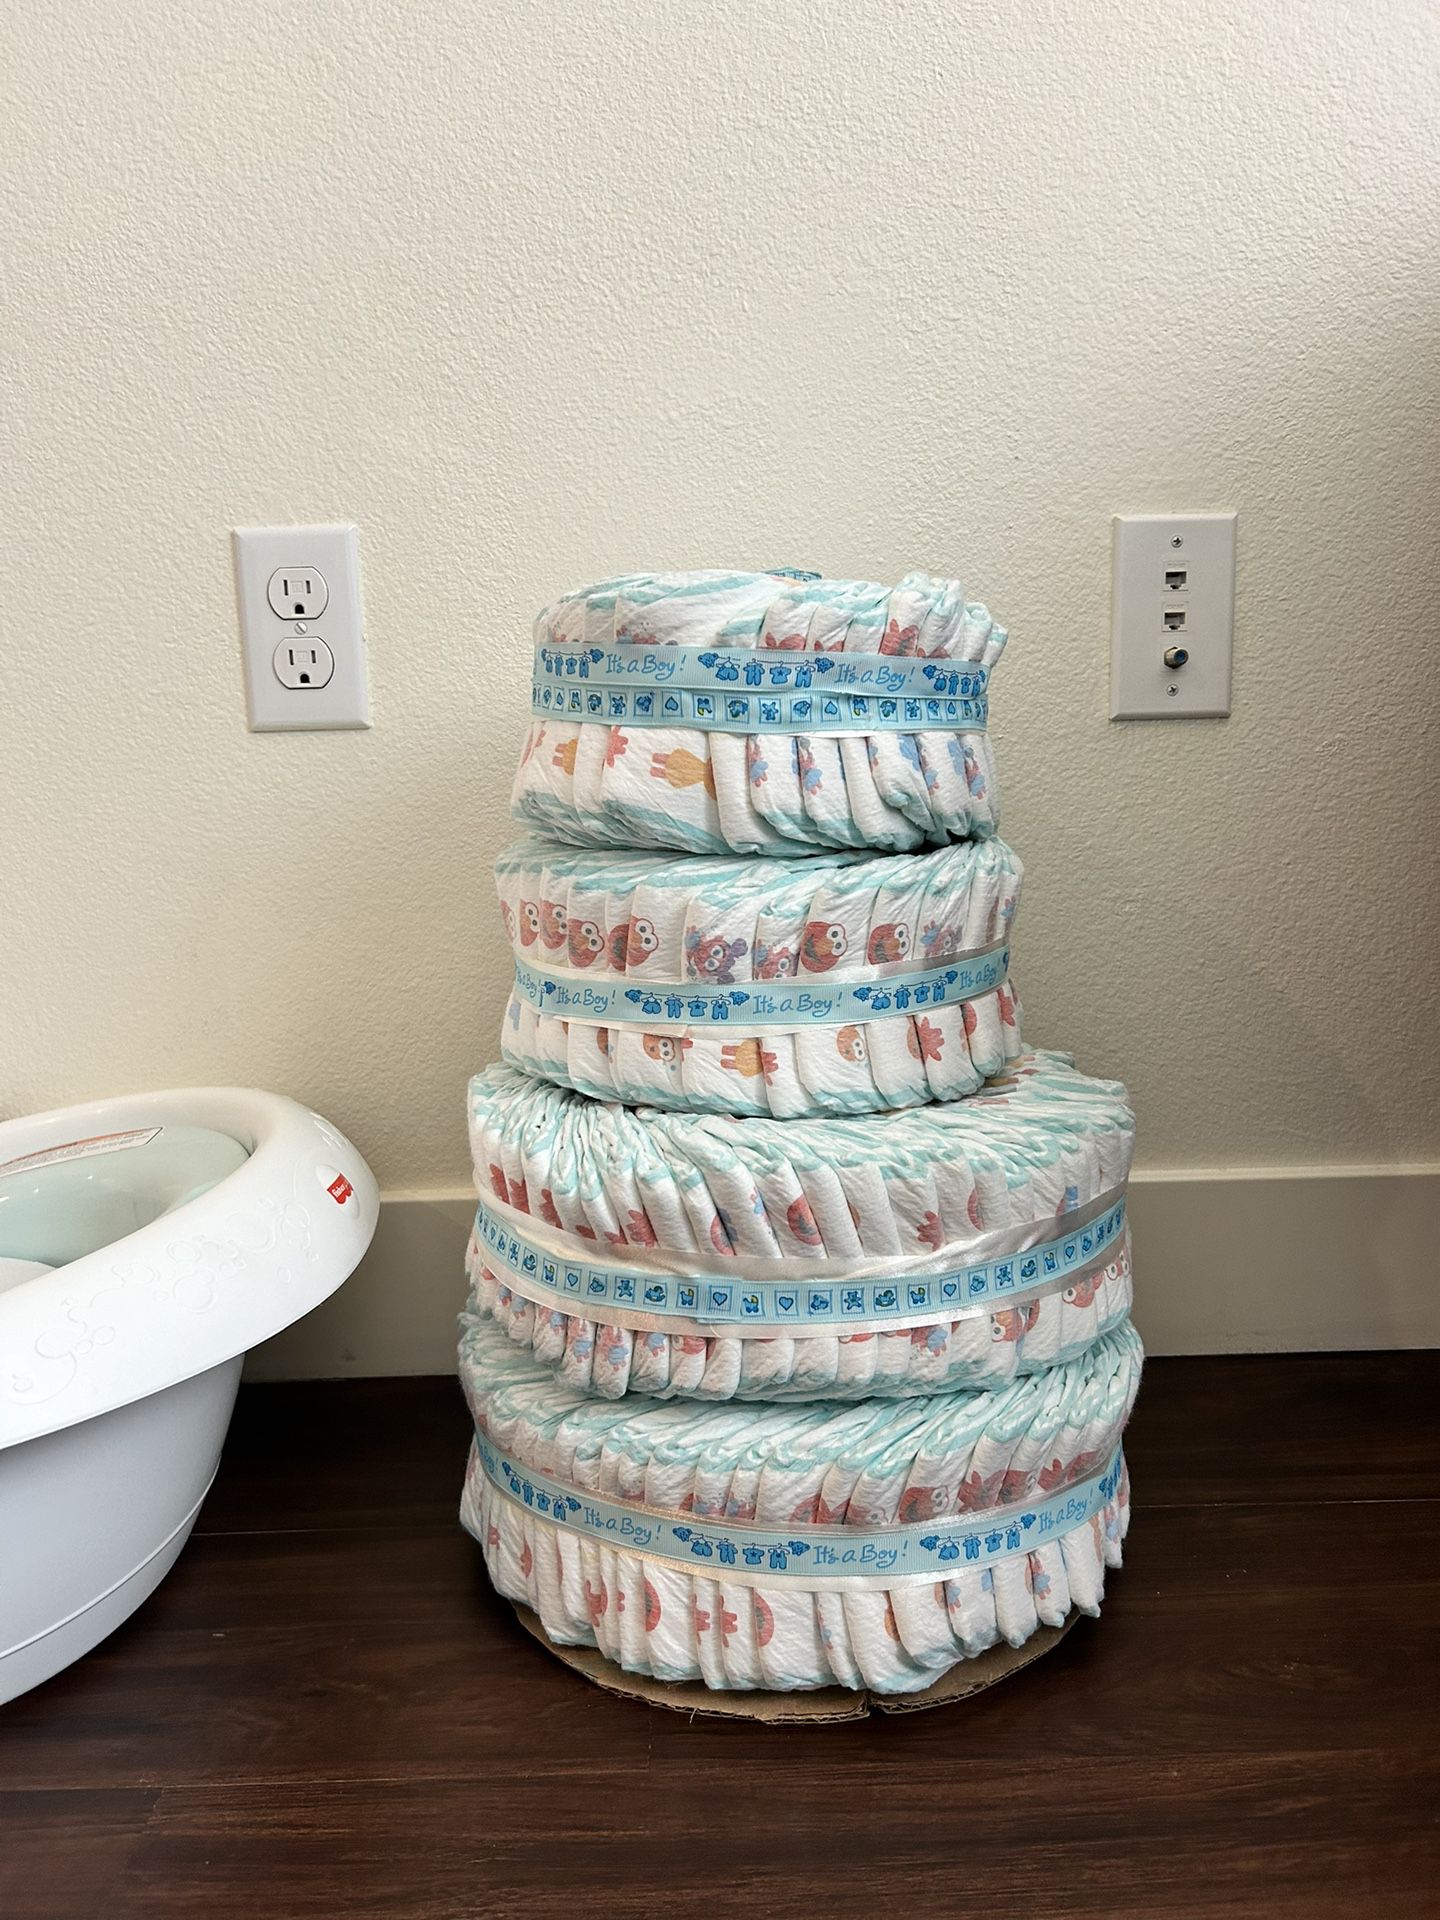 Diaper Tower Gift Cake